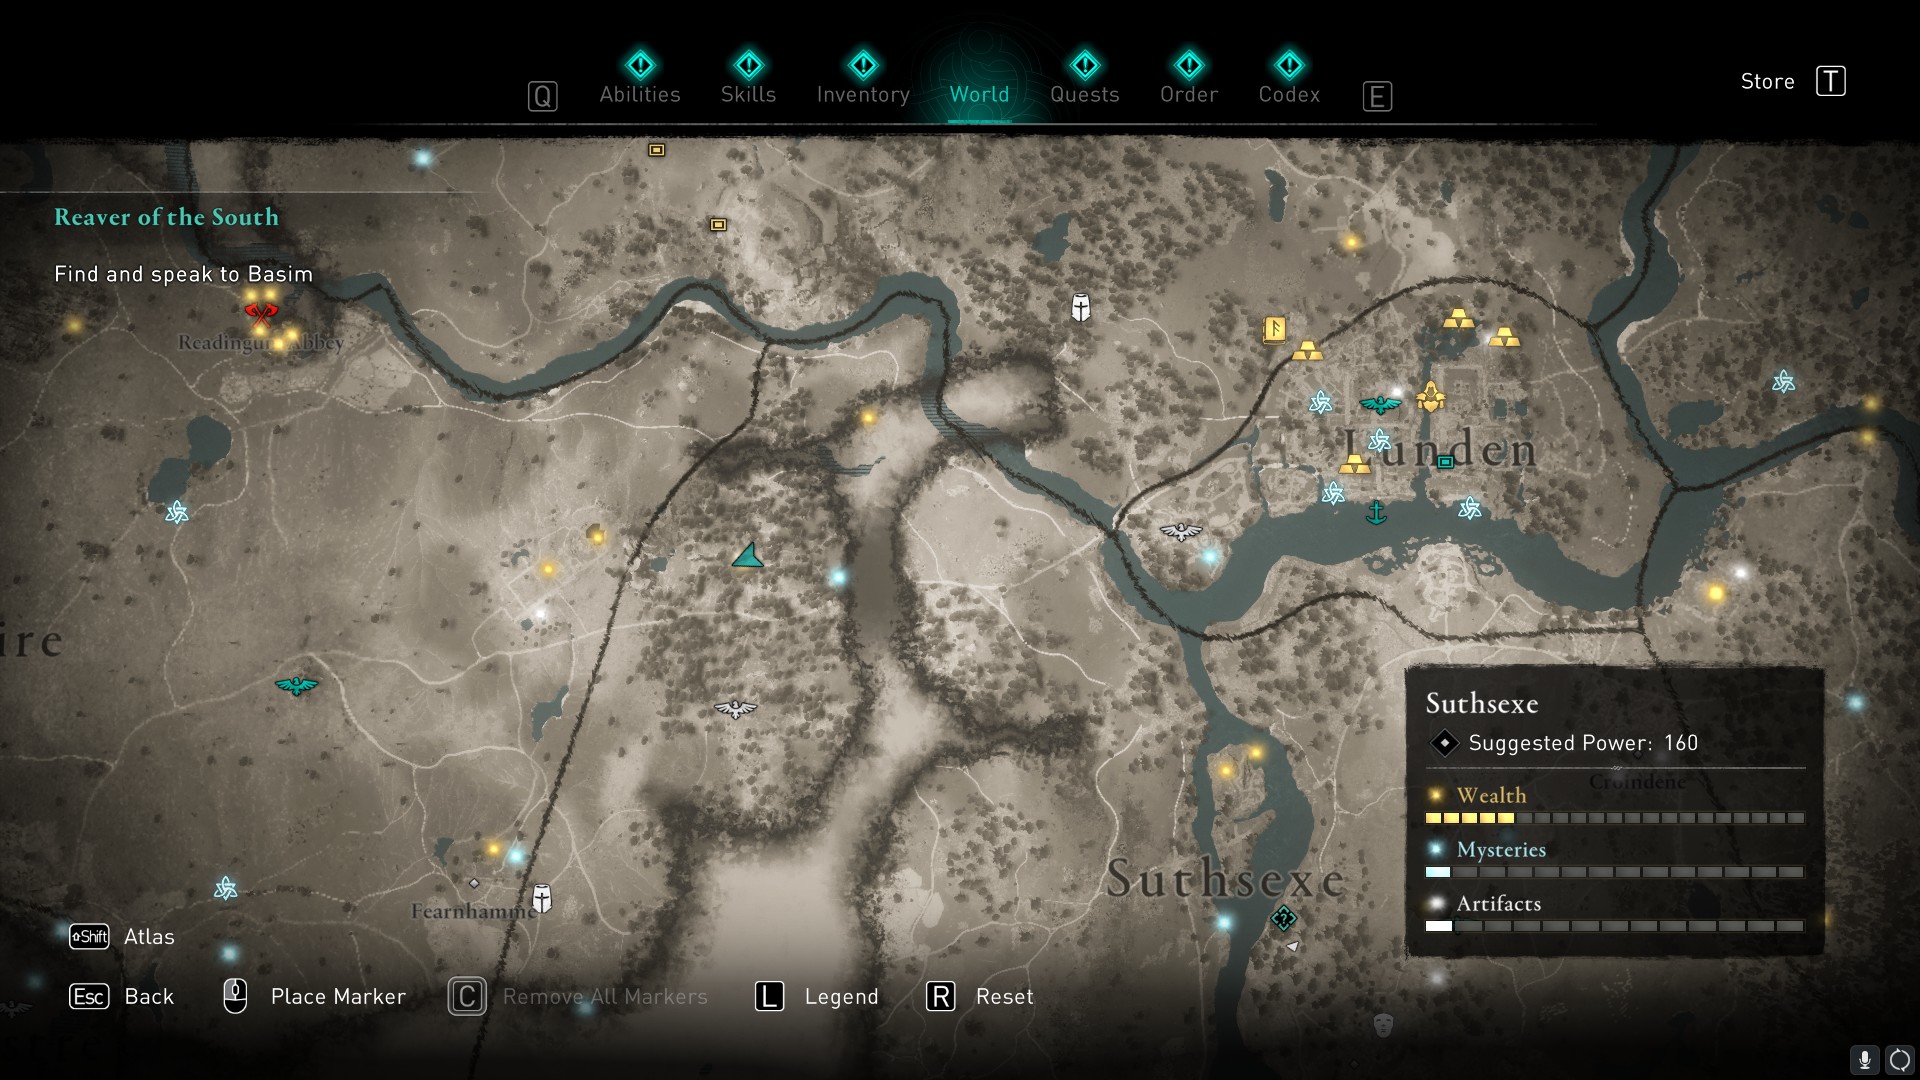 AC valhalla Suthsexe monk's lair treasure hoard map location